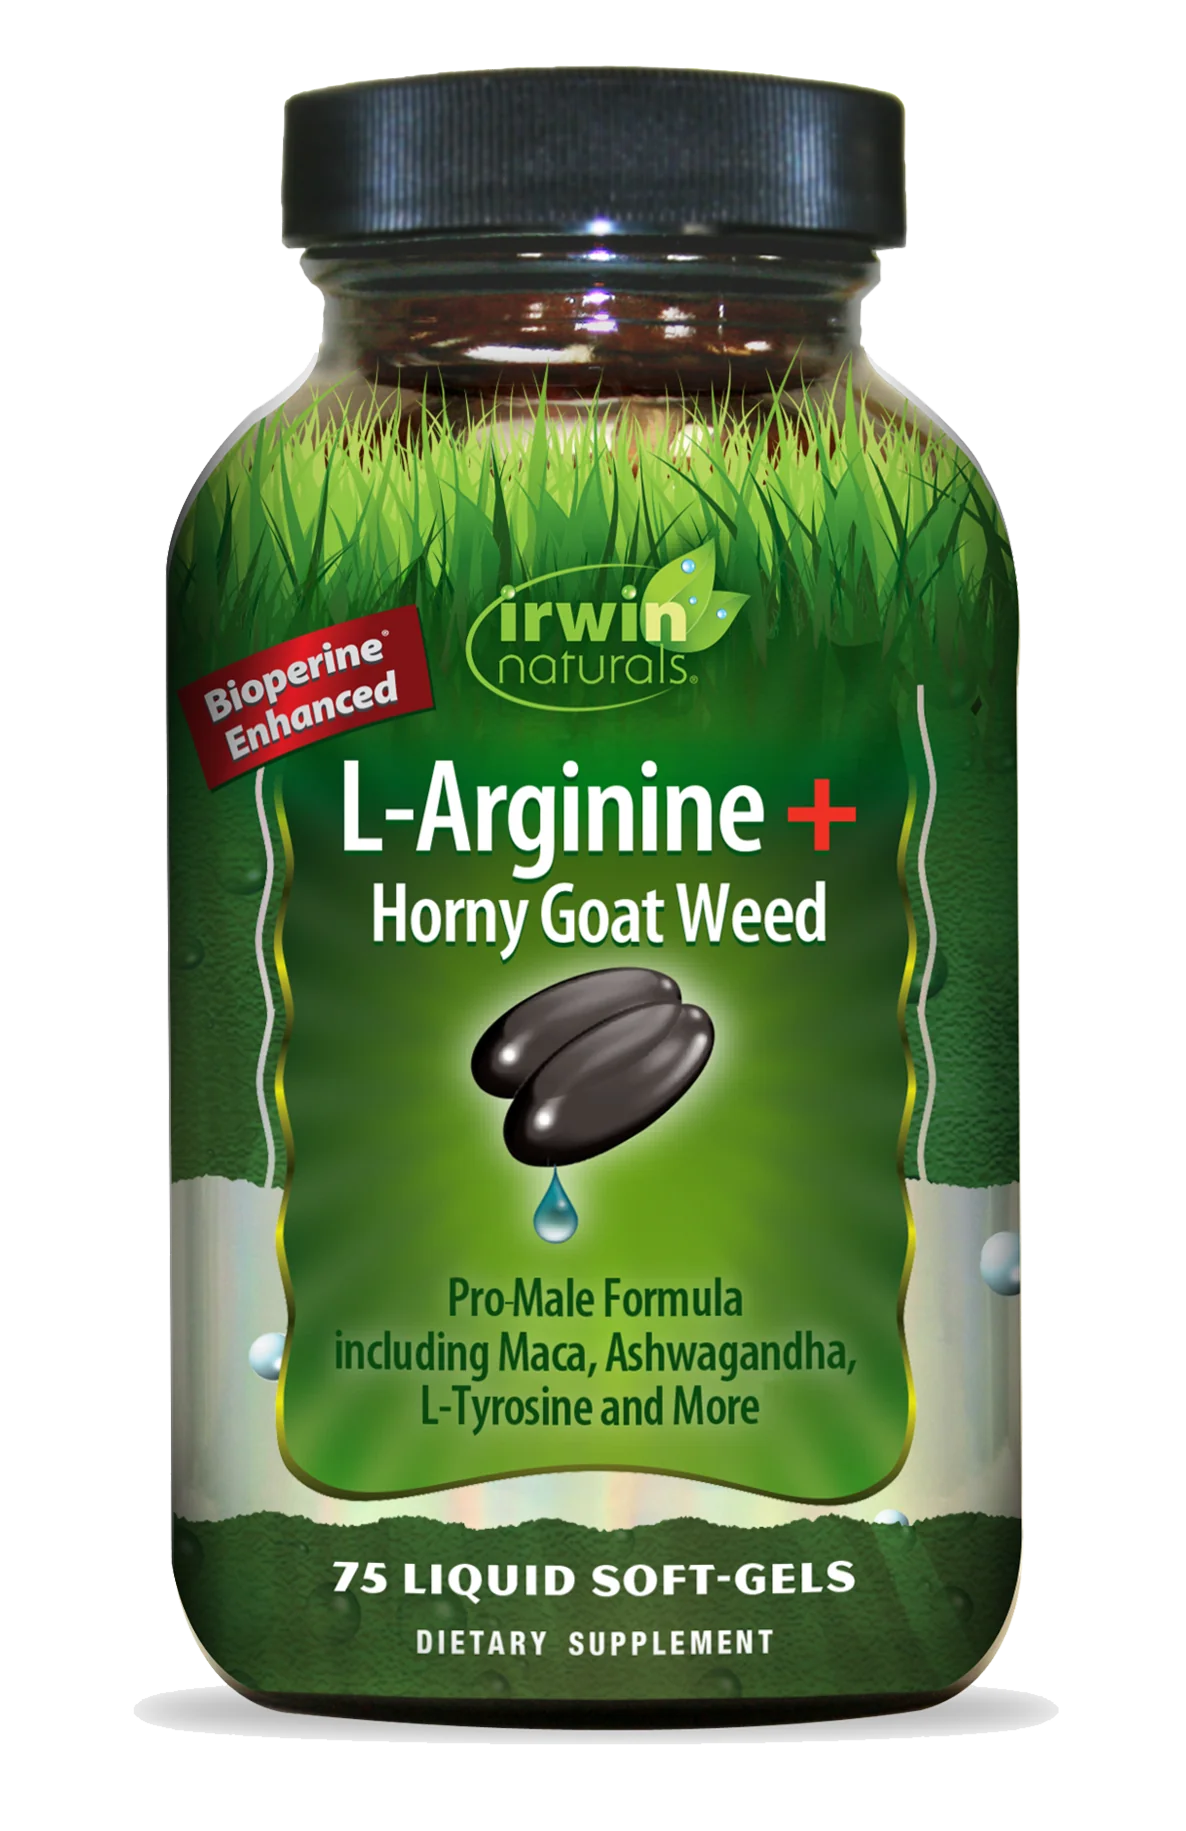 L-Arginine +Horny Goat Weed